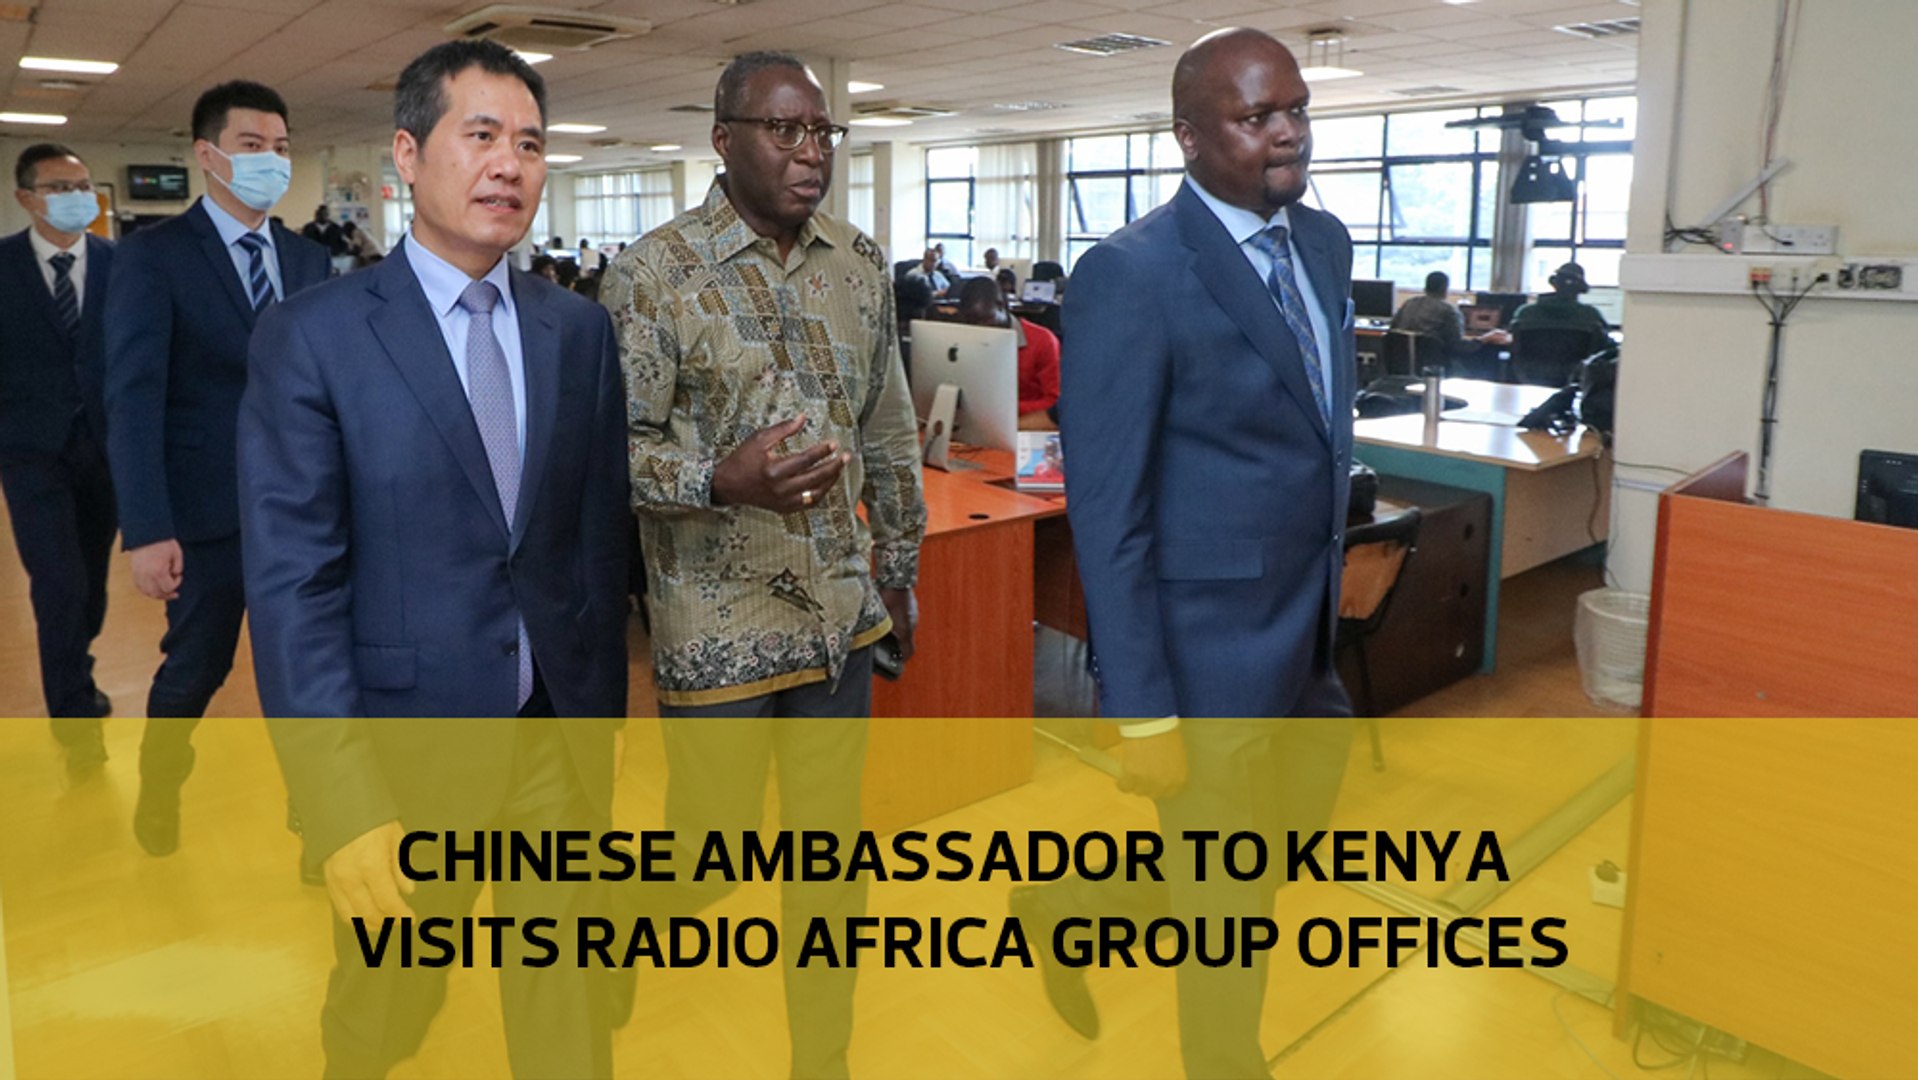 Chinese ambassador to Kenya visits Radio Africa offices - video Dailymotion